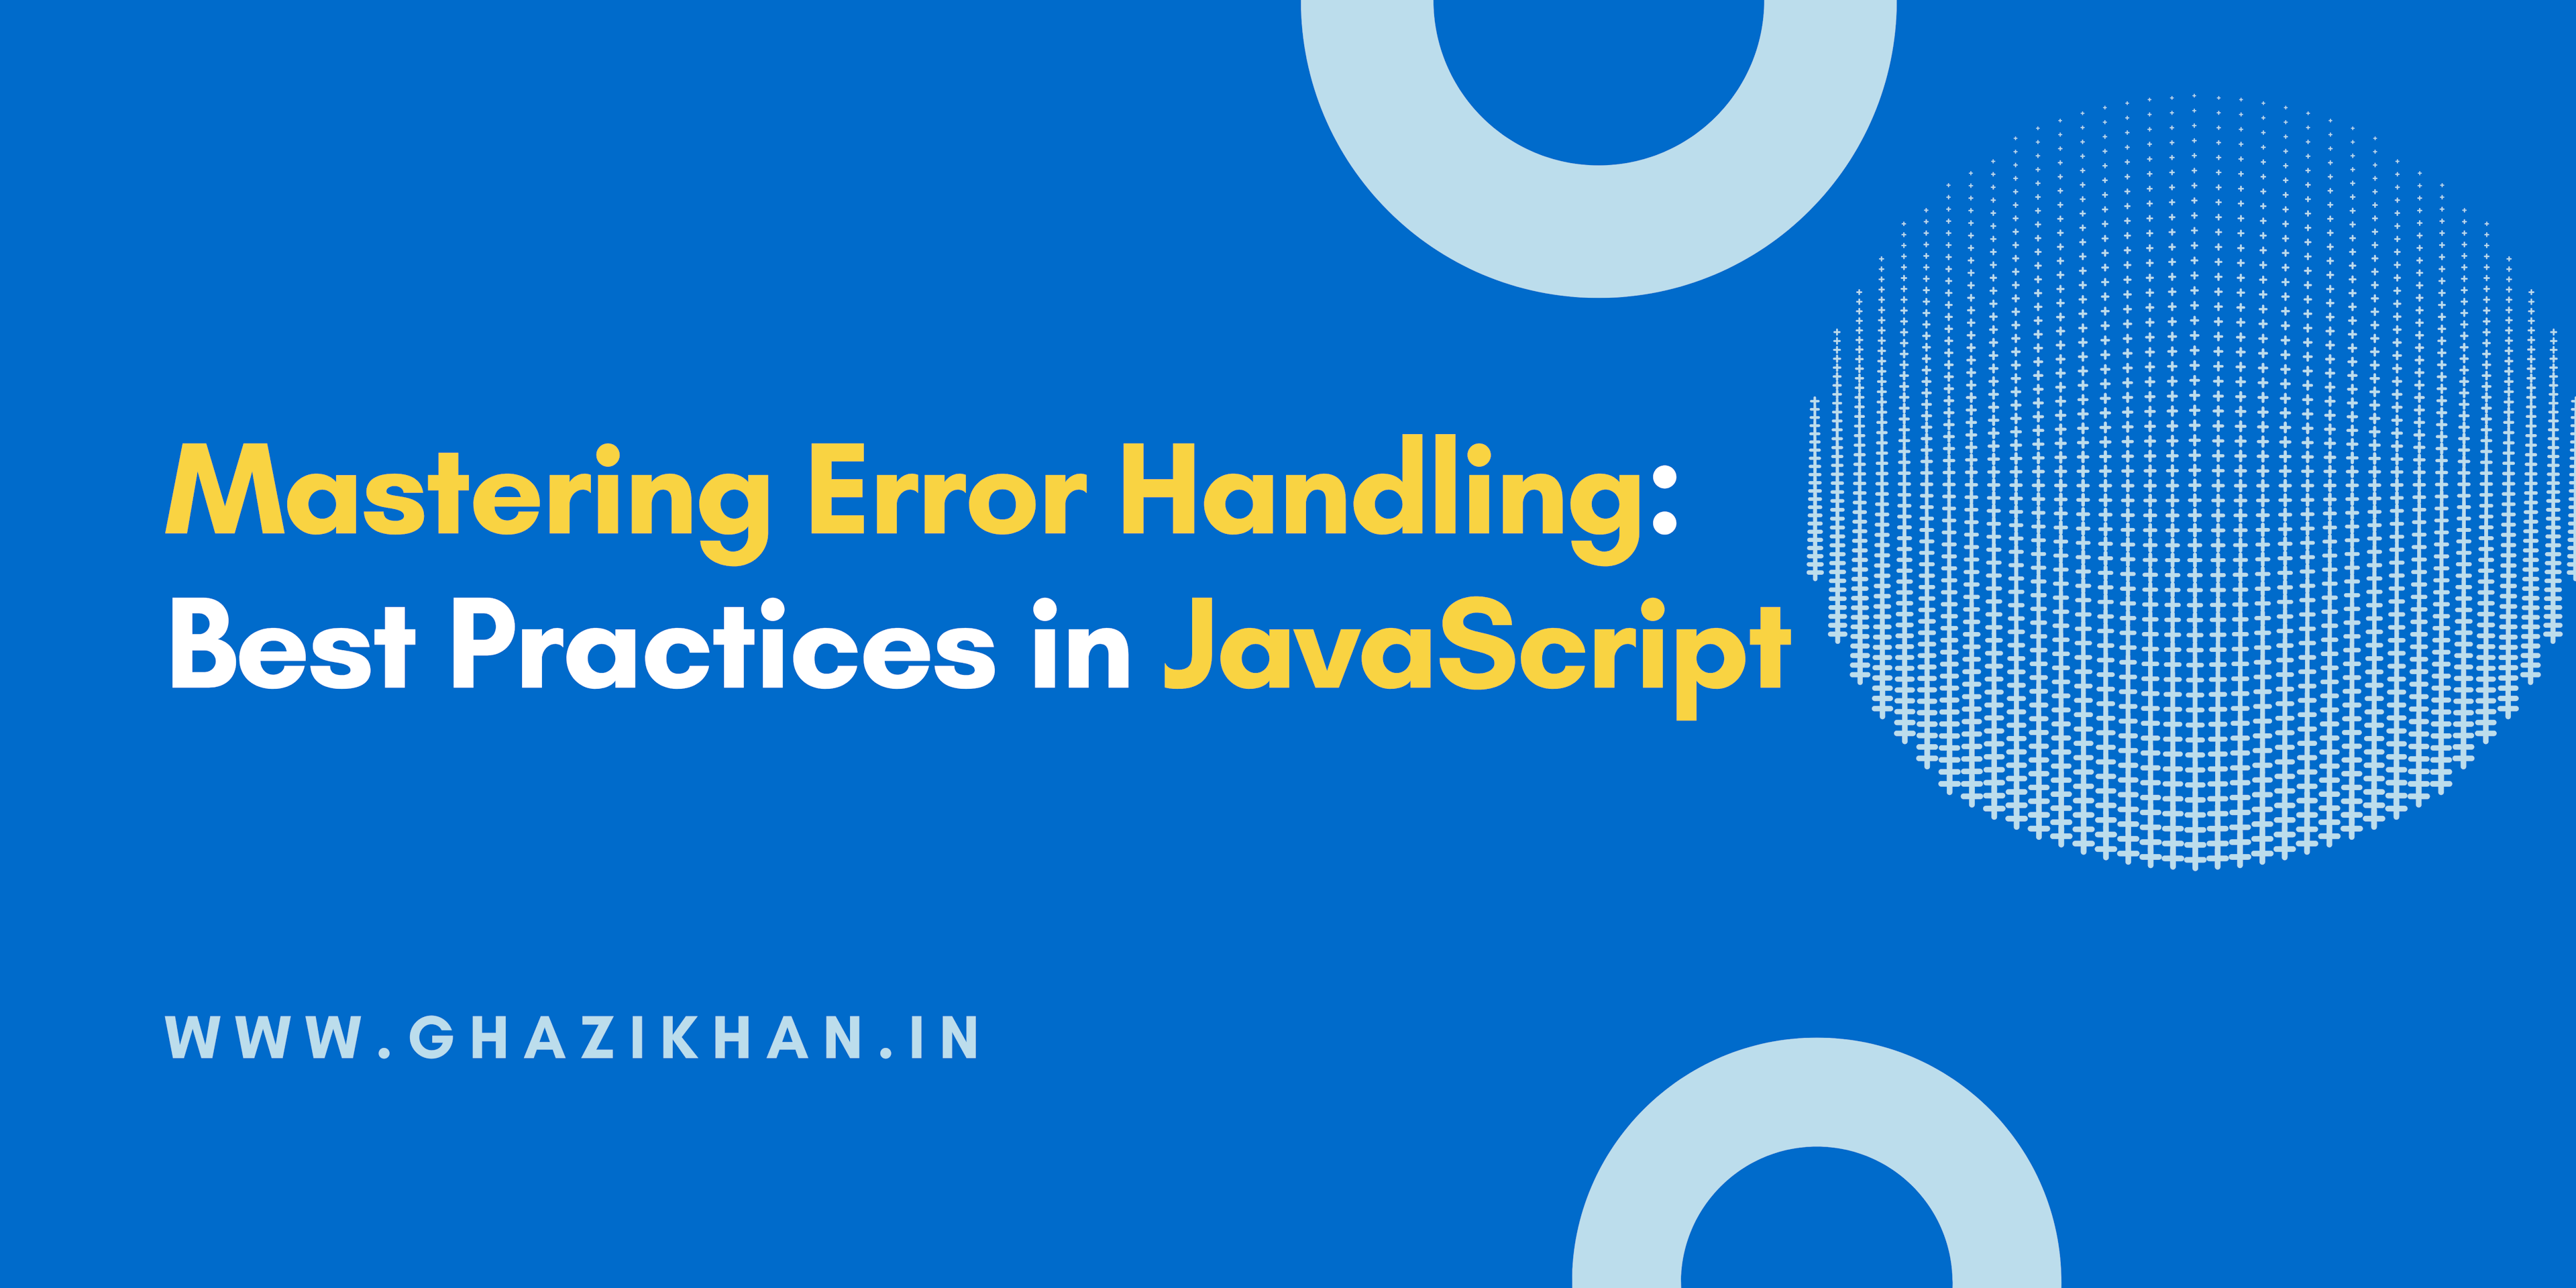 Mastering Error Handling: Best Practices in JavaScript